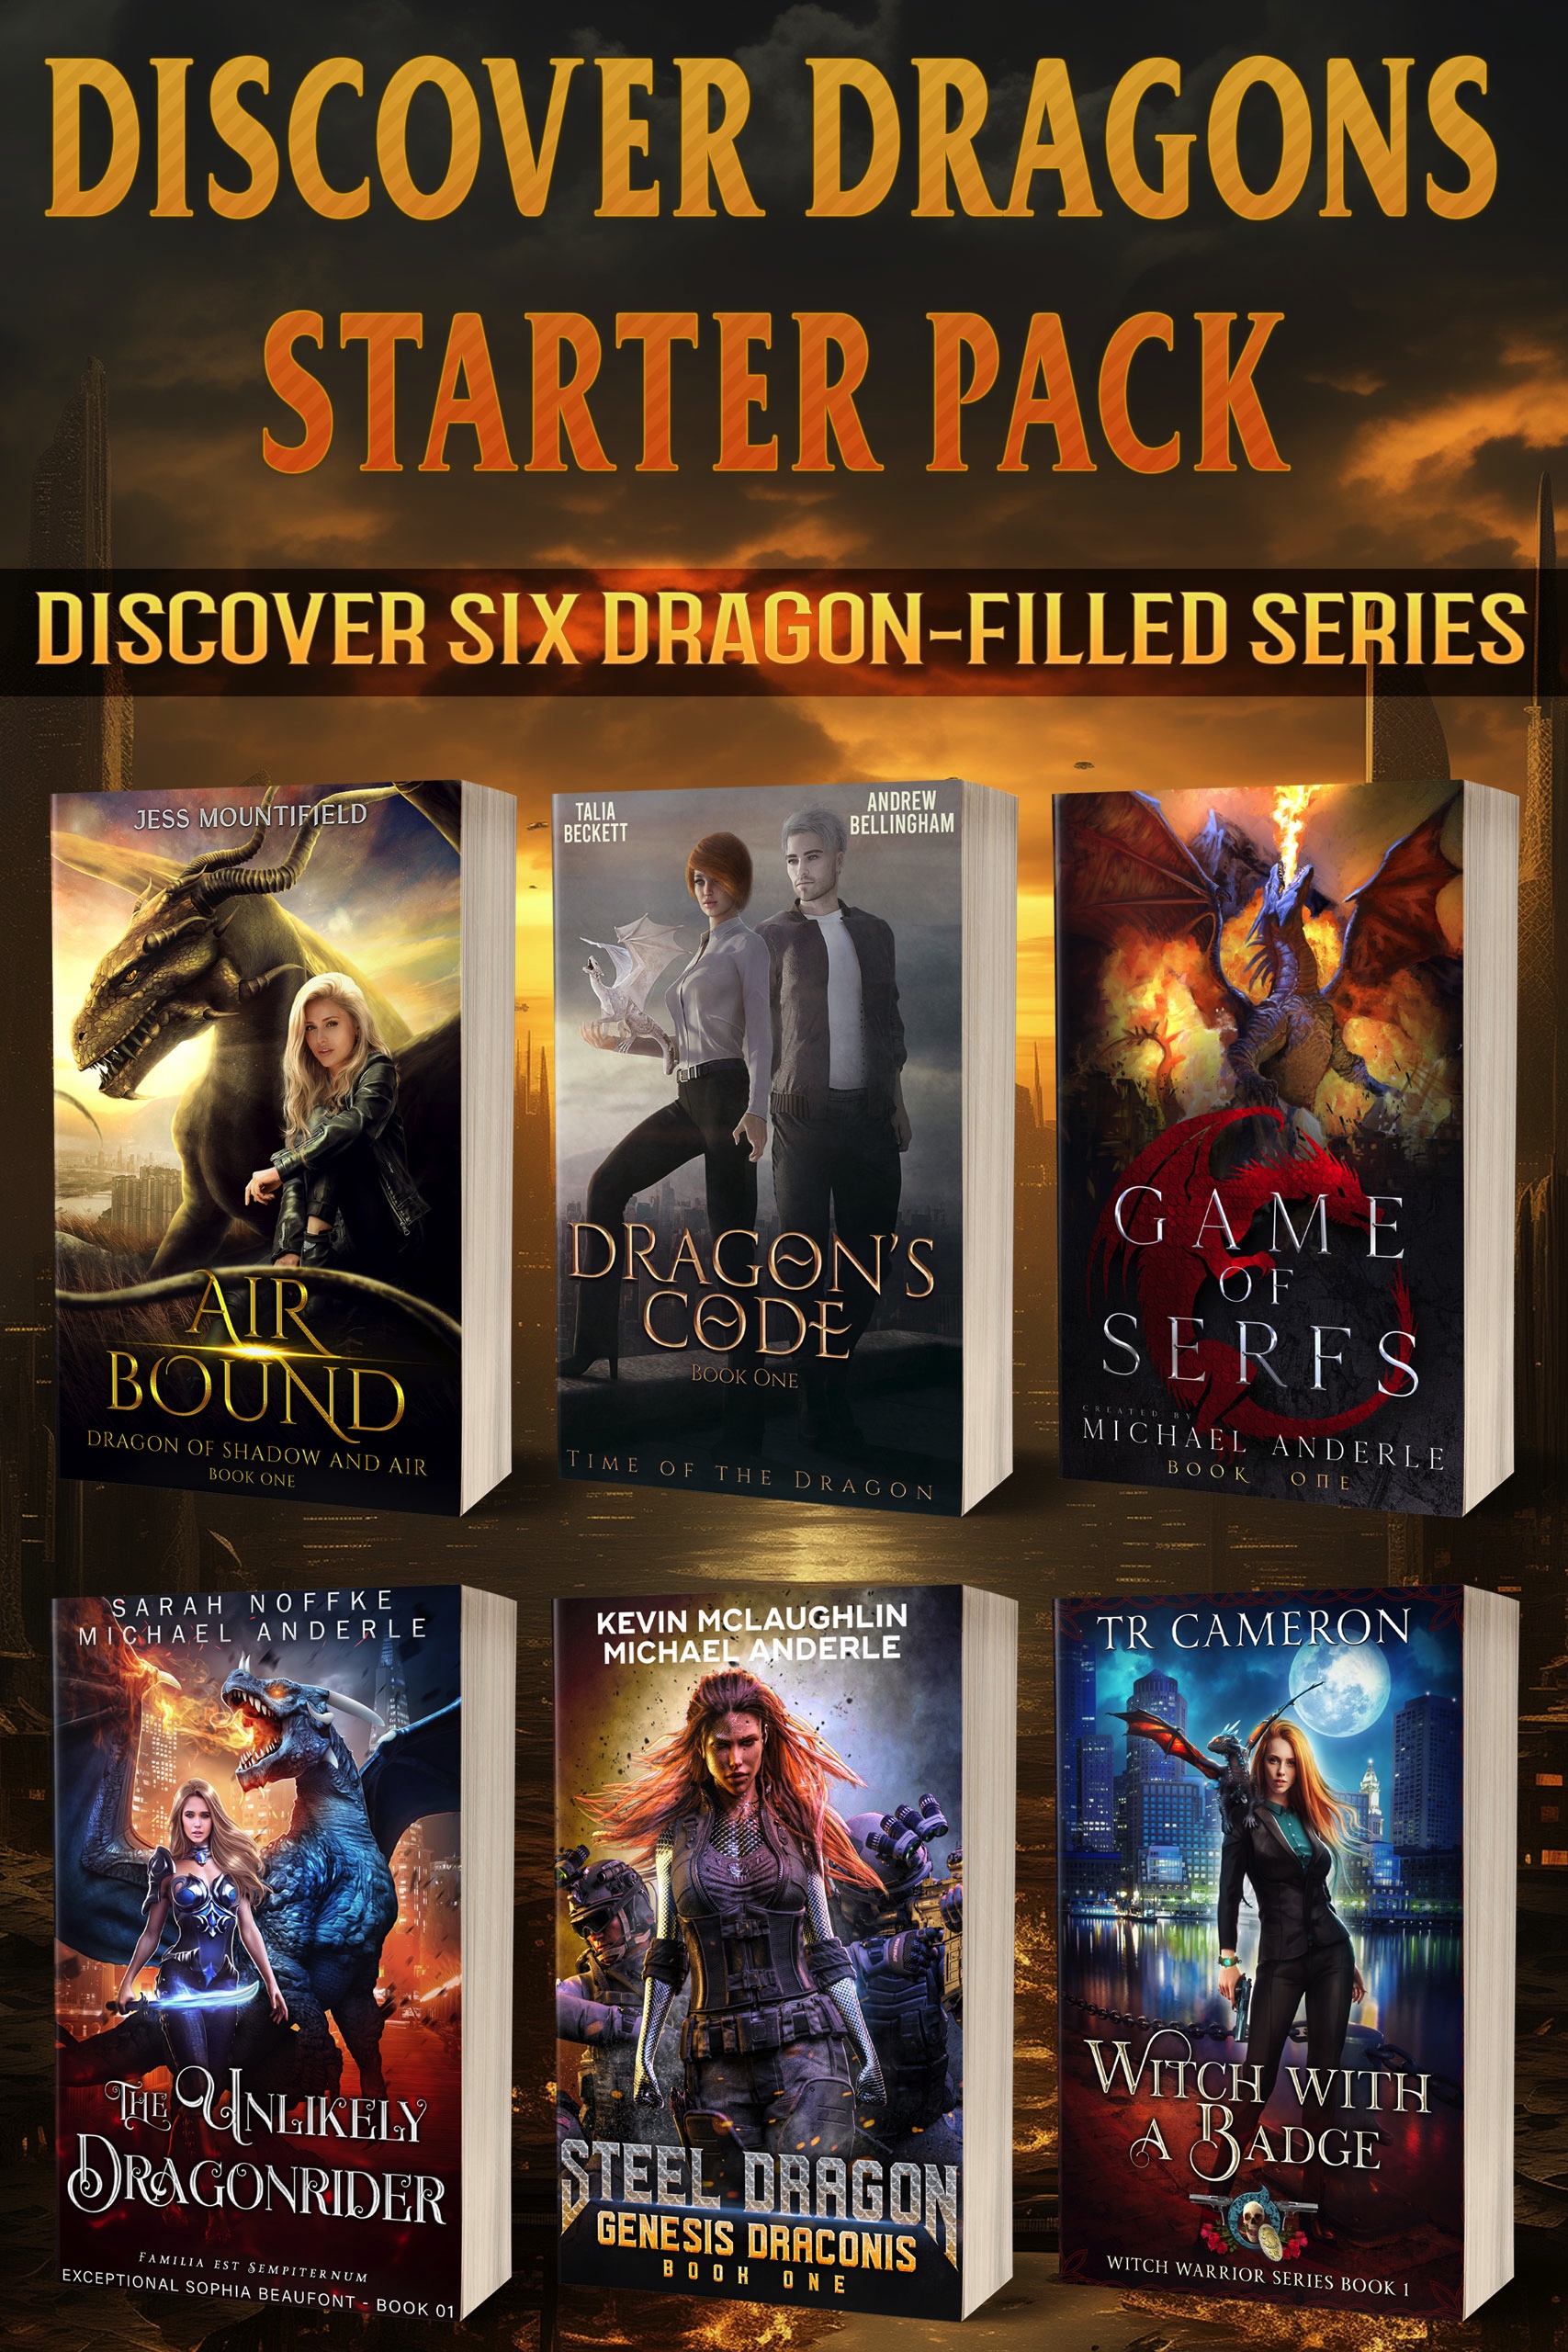 Discover Dragons Starter Pack